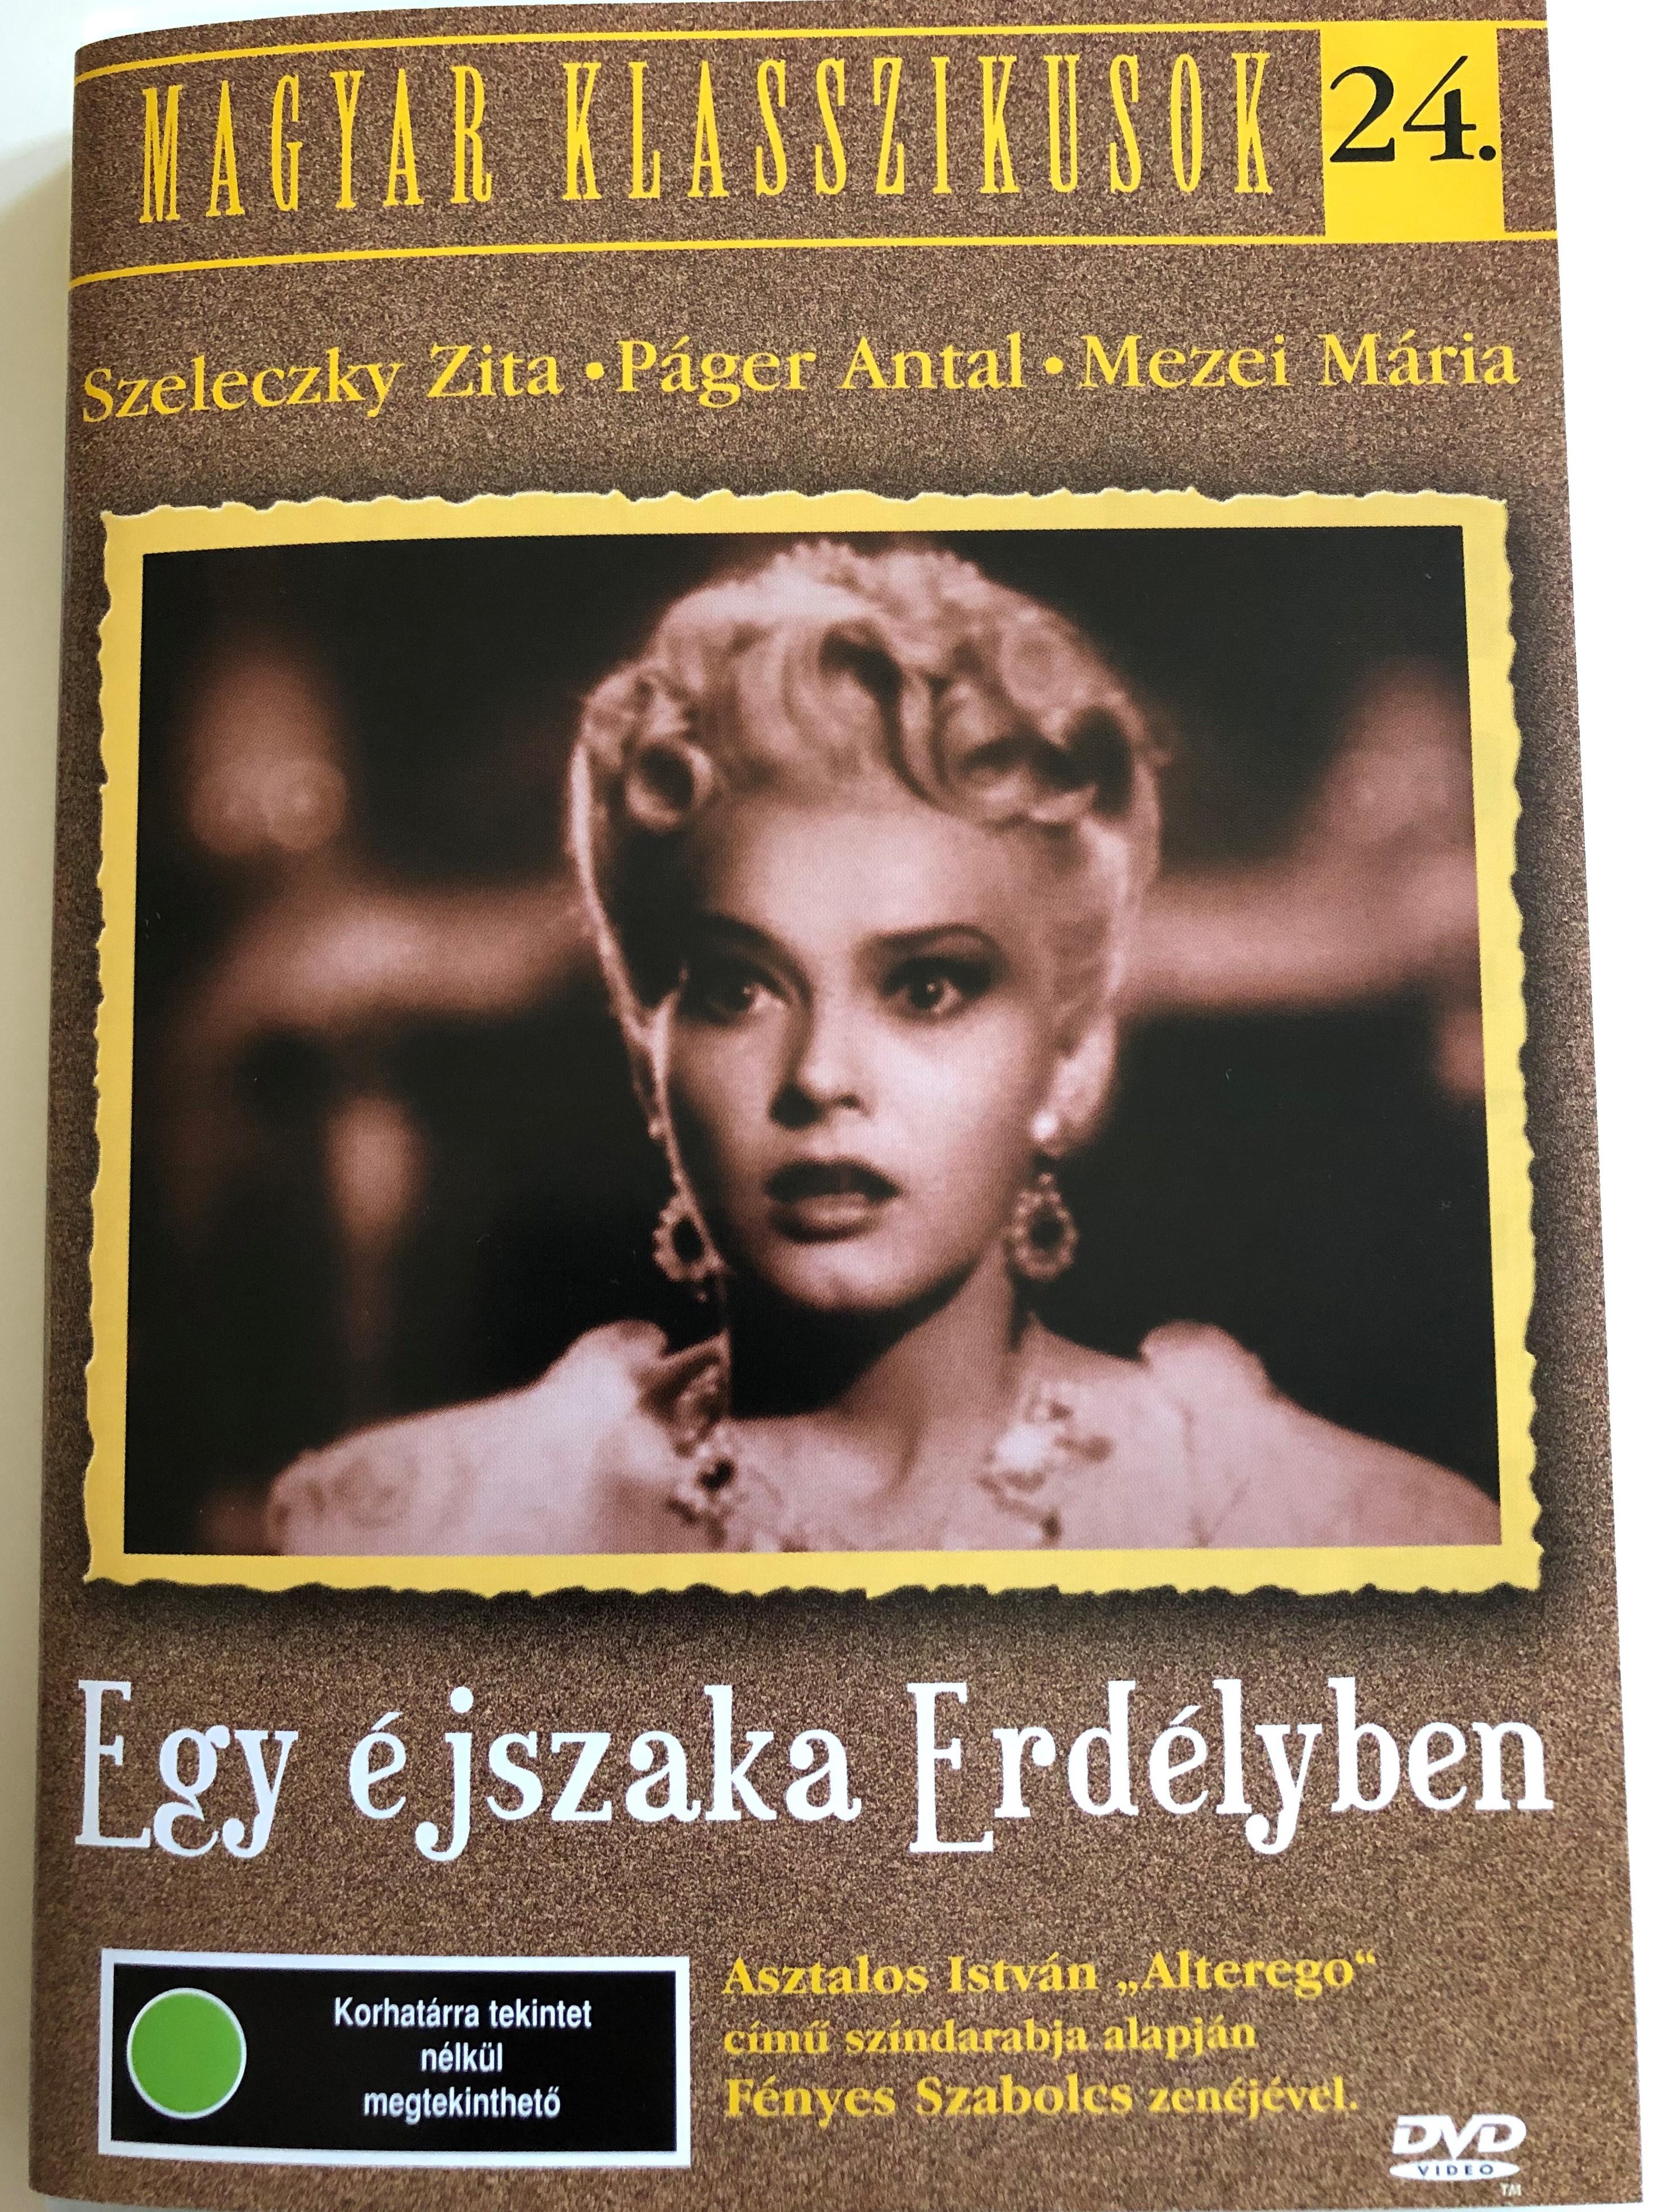 egy-jszaka-erd-lyben-dvd-1941-one-night-in-transylvania-directed-by-b-n-frigyes-starring-szeleczky-zita-p-ger-antal-mezei-m-ria-1-.jpg